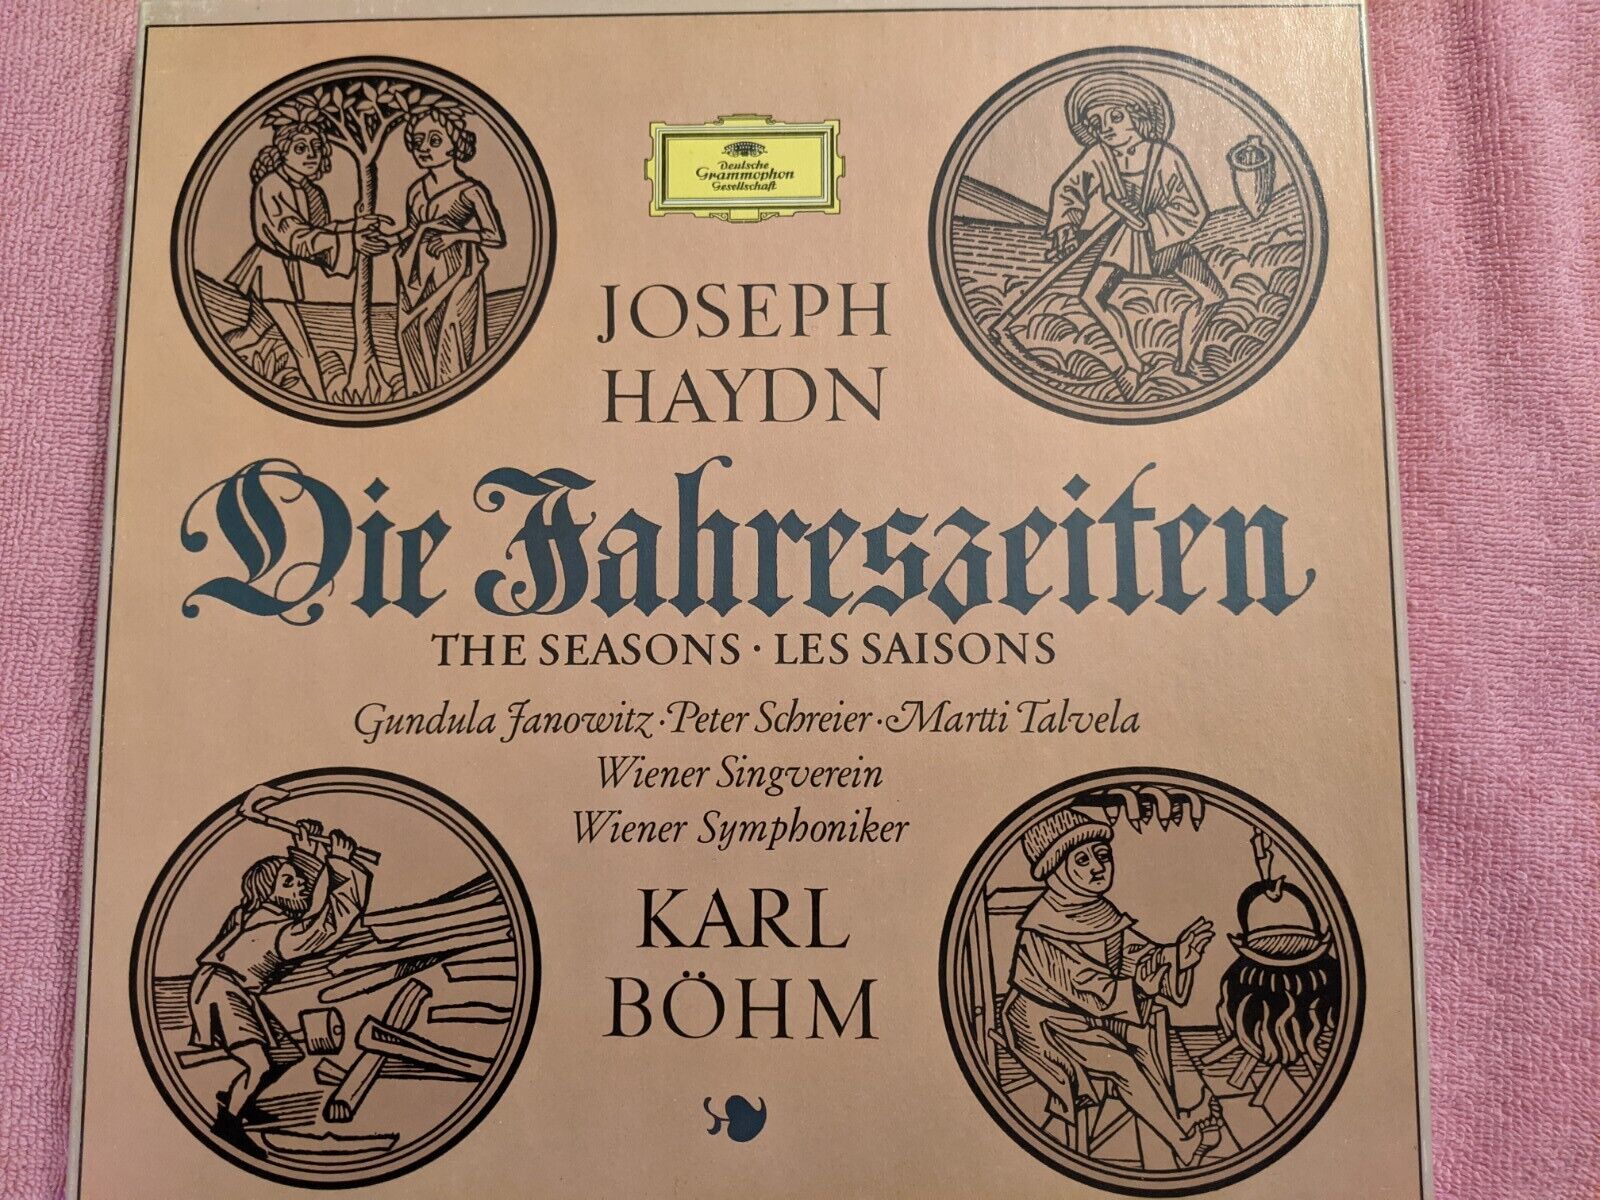 HAYDN THE SEASONS Weiner Symphoniker, Karl Bohm  - 3 LP Set, EXC Condition